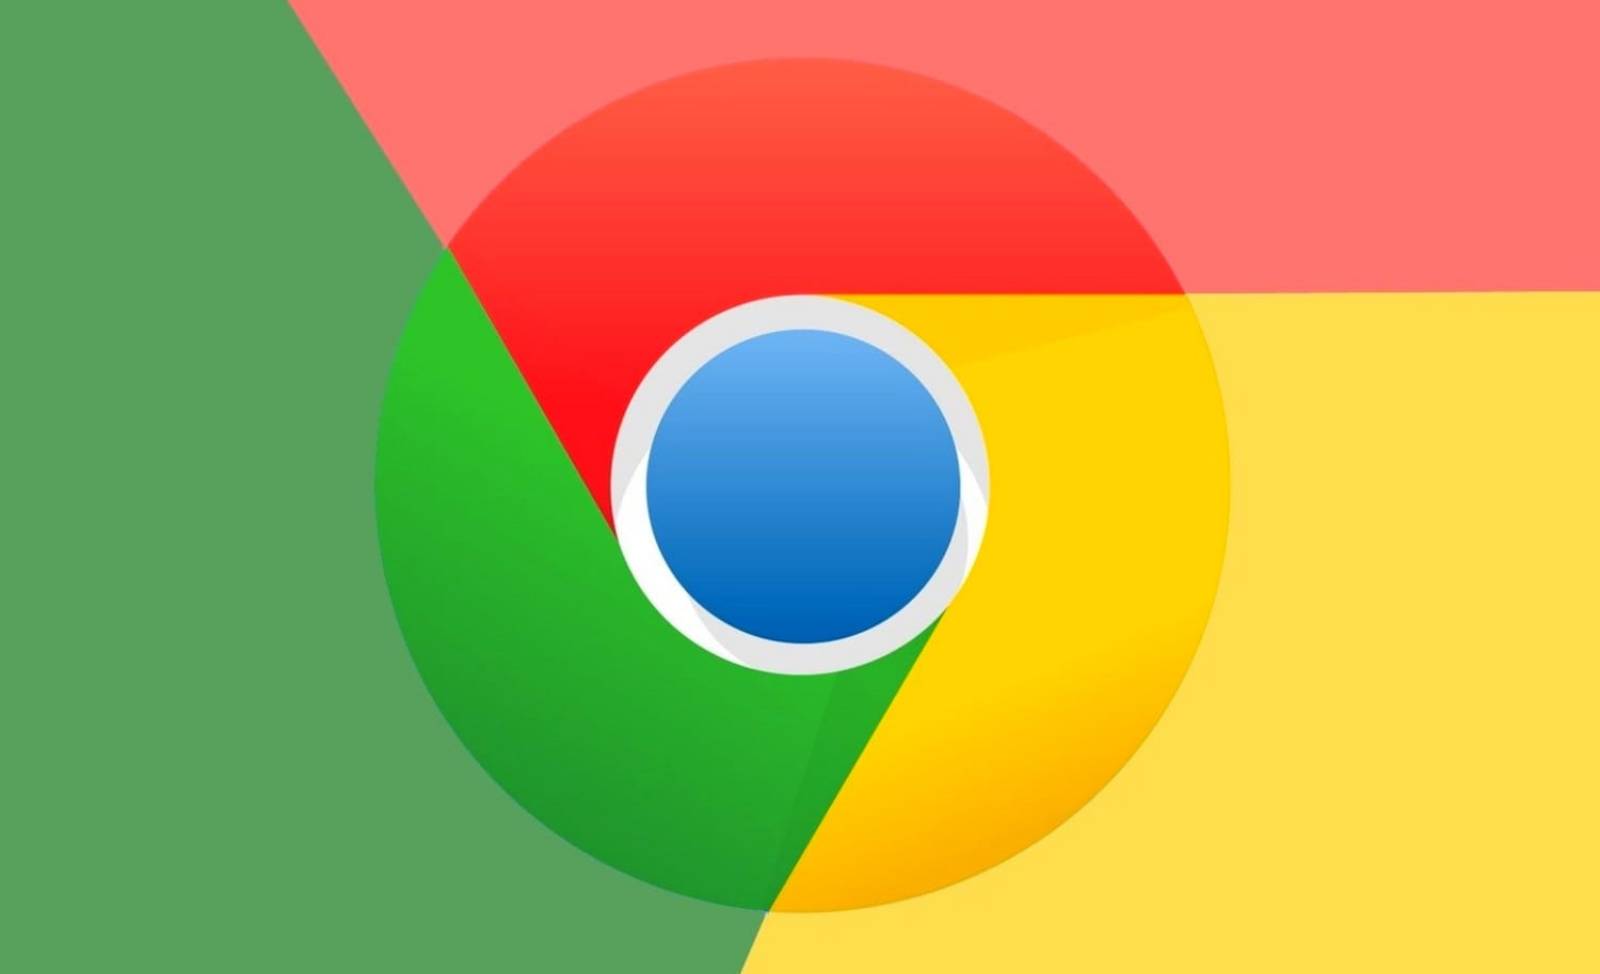 Google Chrome amanare